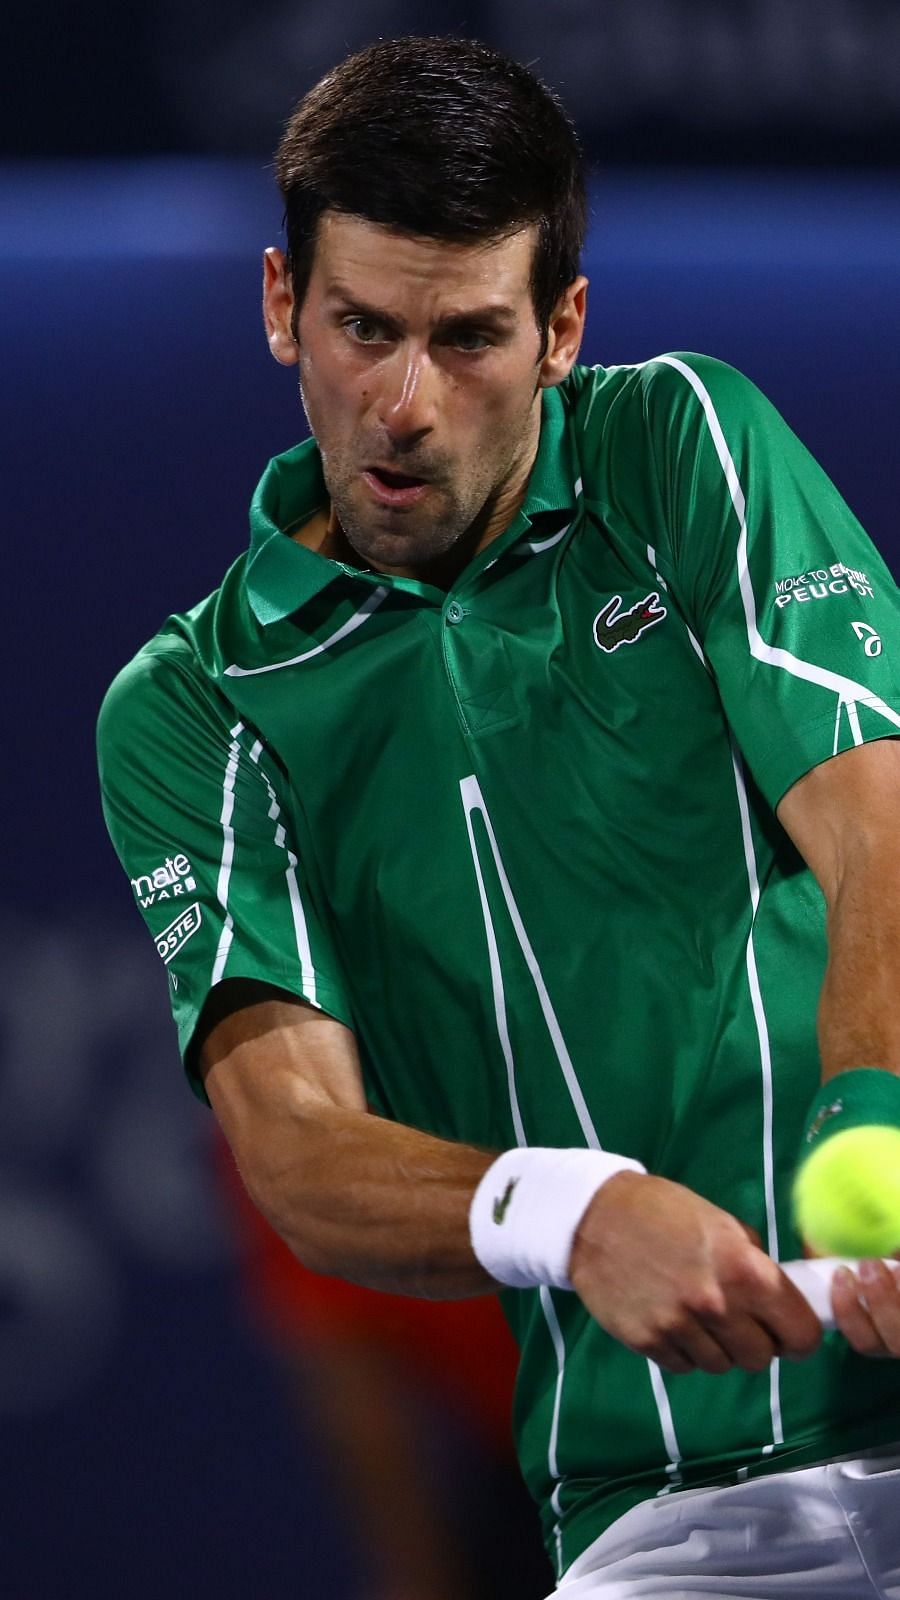 ATP Dubai Tennis Championships 2020 Novak Djokovic vs Karen Khachanov Preview, where to watch and more